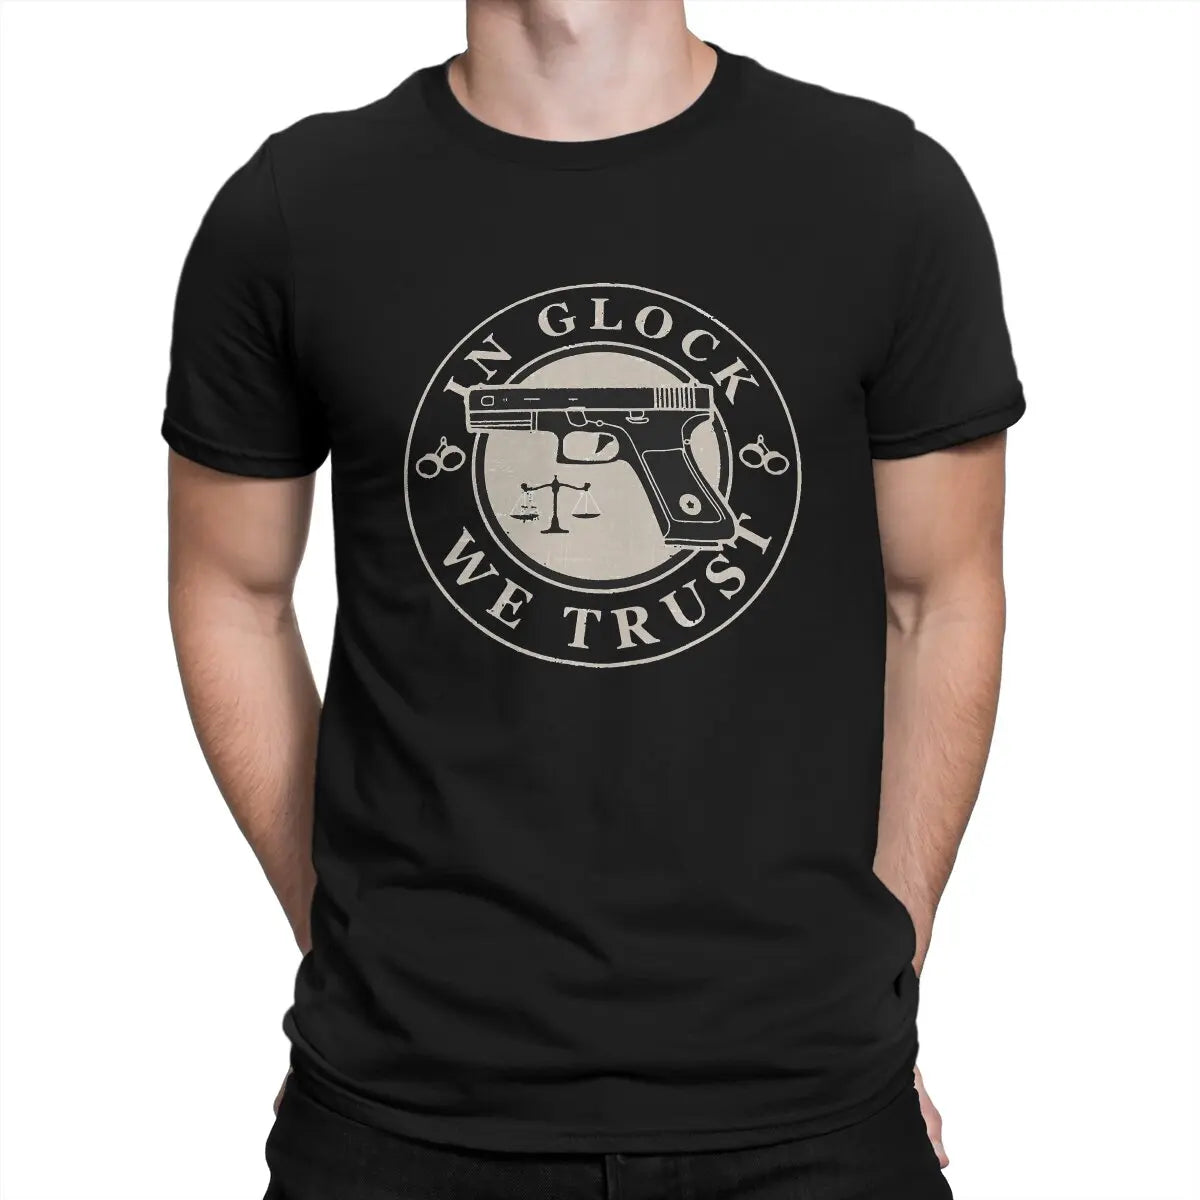 In Glock We Trust T-Shirts